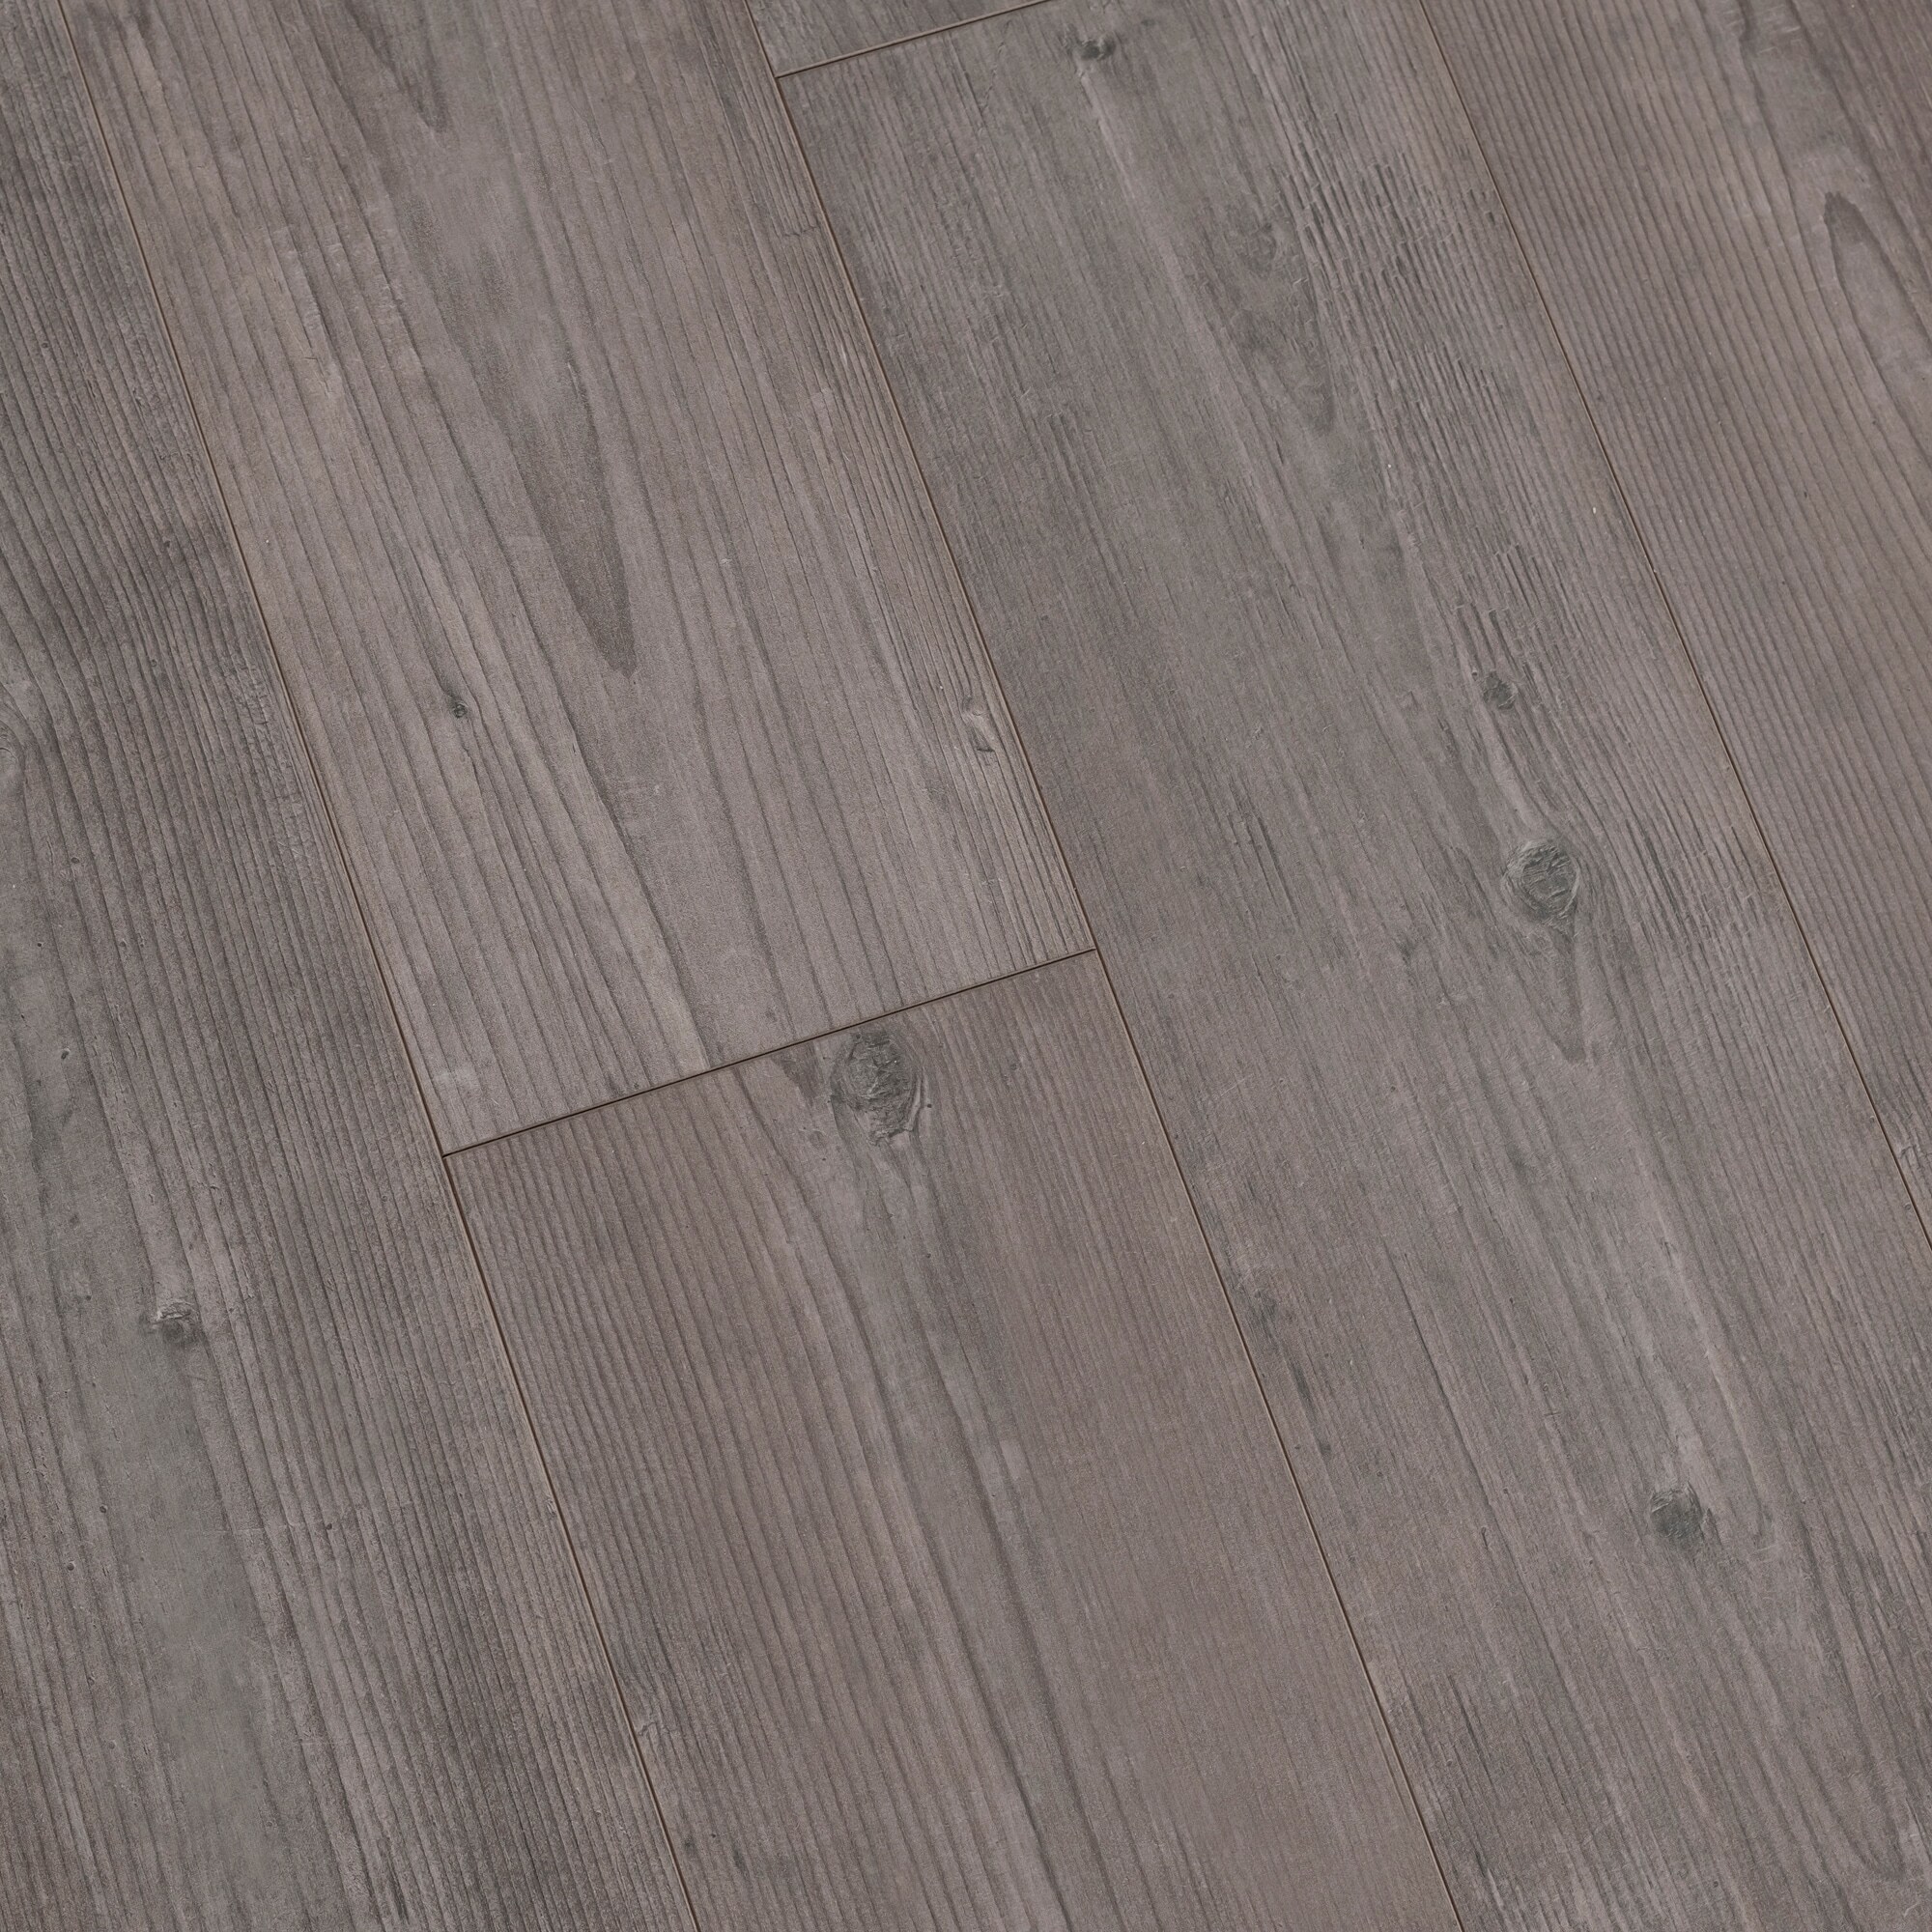 Xtra 7 x 47 x 12mm Laminate Flooring Pergo Color: Timeworn Pine